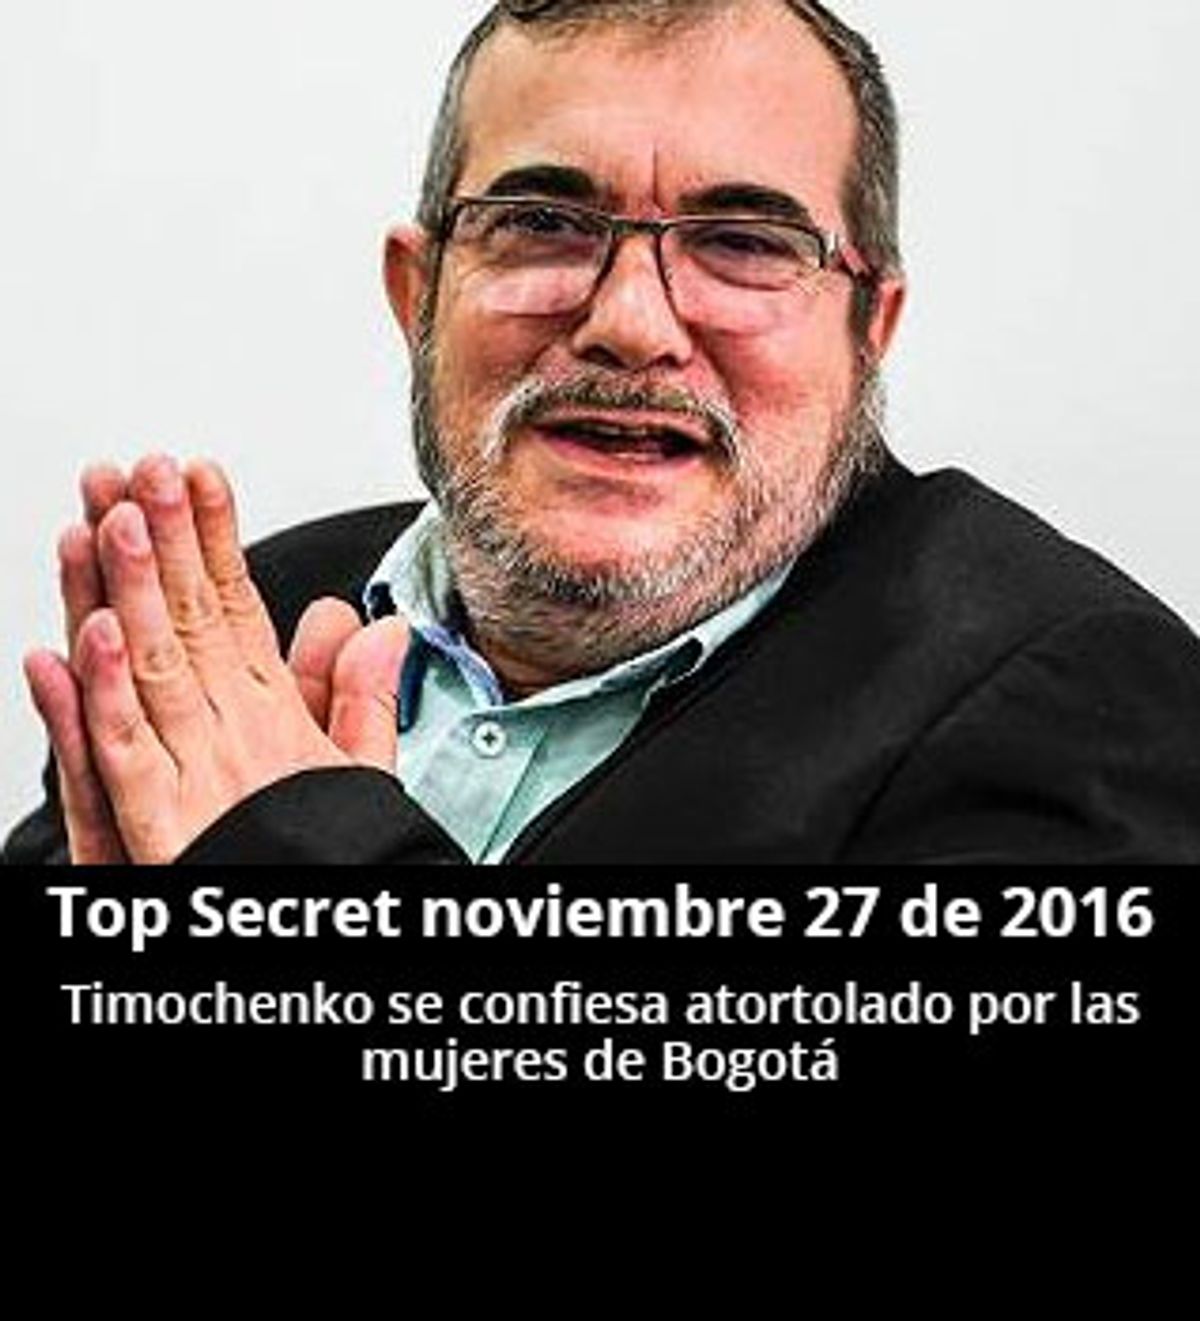 Top Secret noviembre 27 de 2016